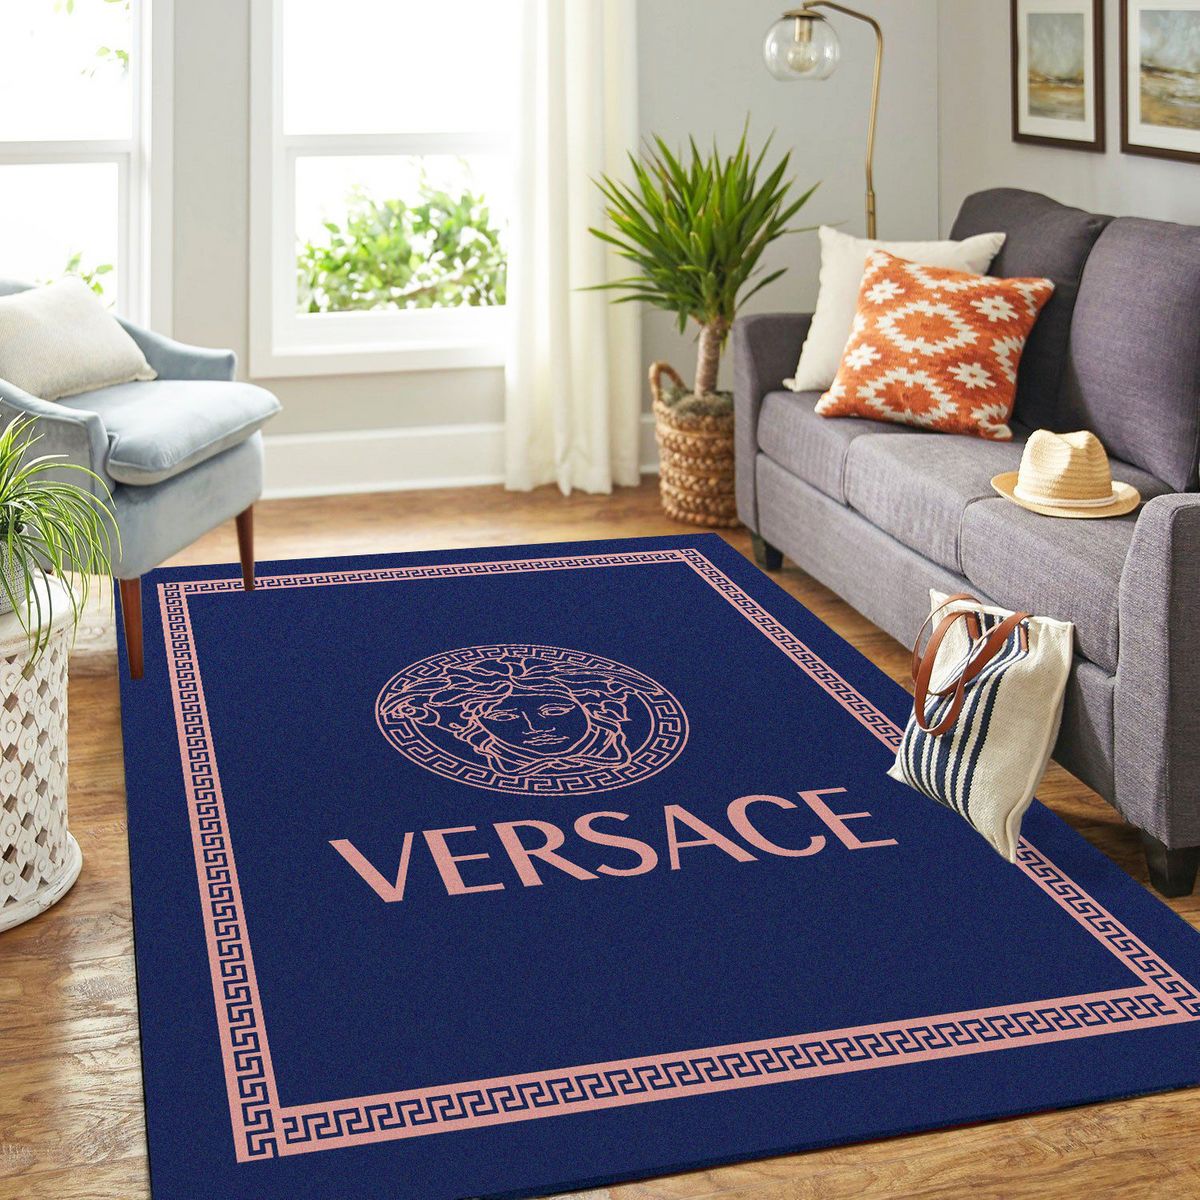 Versace Blue Luxury Brand Carpet Rug